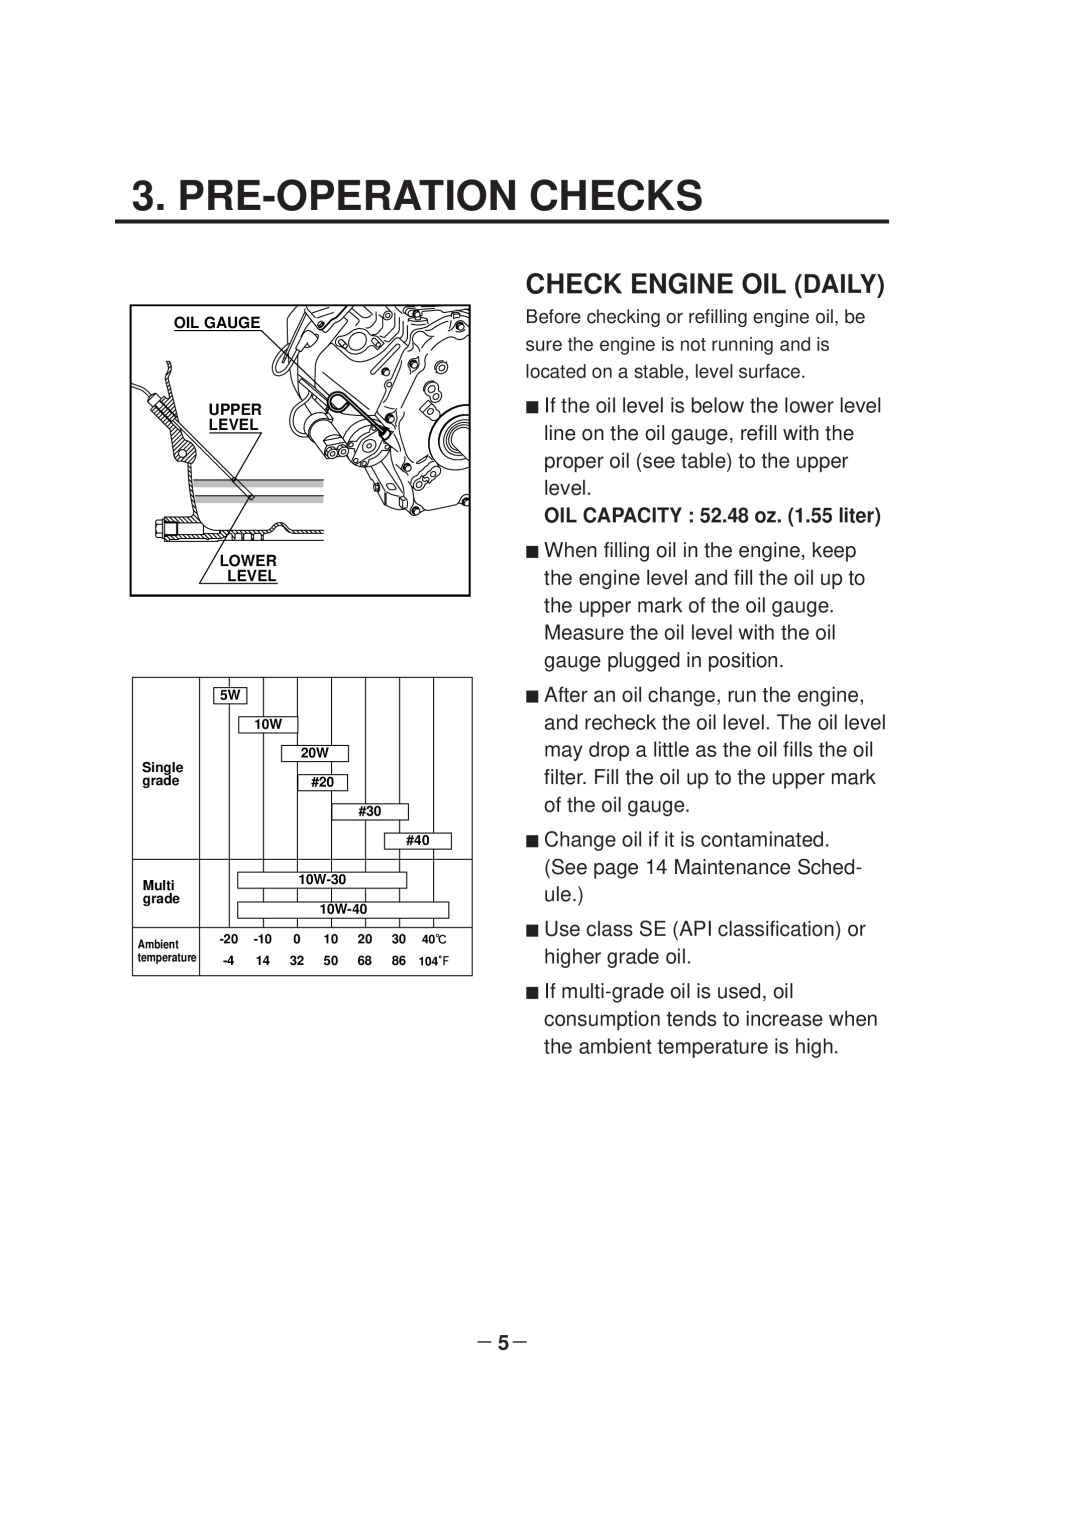 Subaru Robin Power Products EH64D Pre-Operation Checks, Check Engine Oil Daily, OIL CAPACITY 52.48 oz. 1.55 liter, － 5－ 